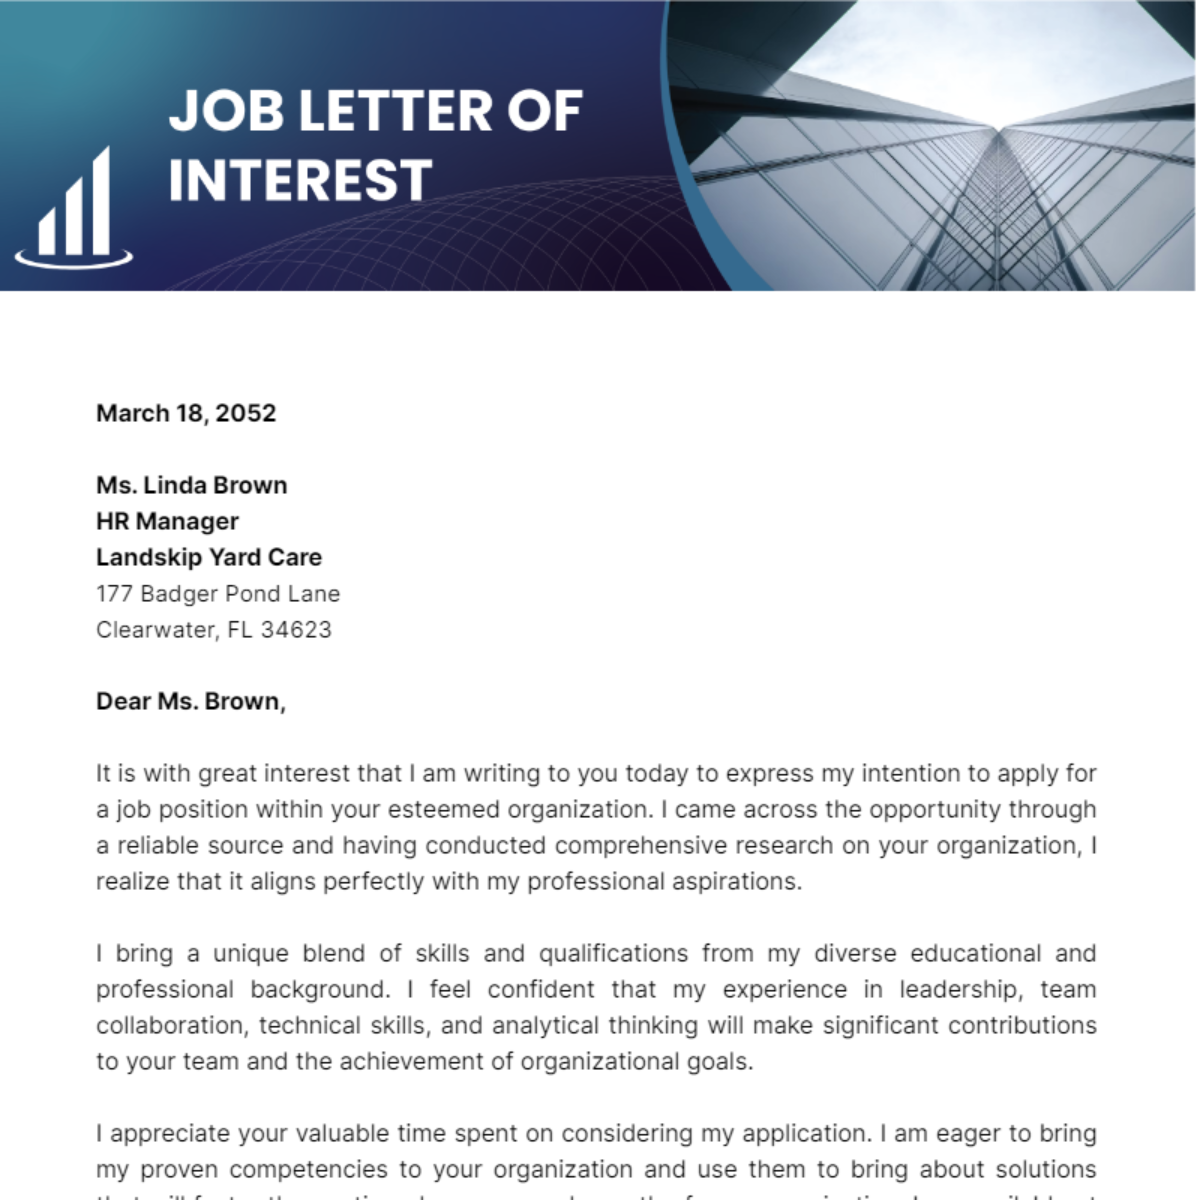 Job Letter of Interest Template